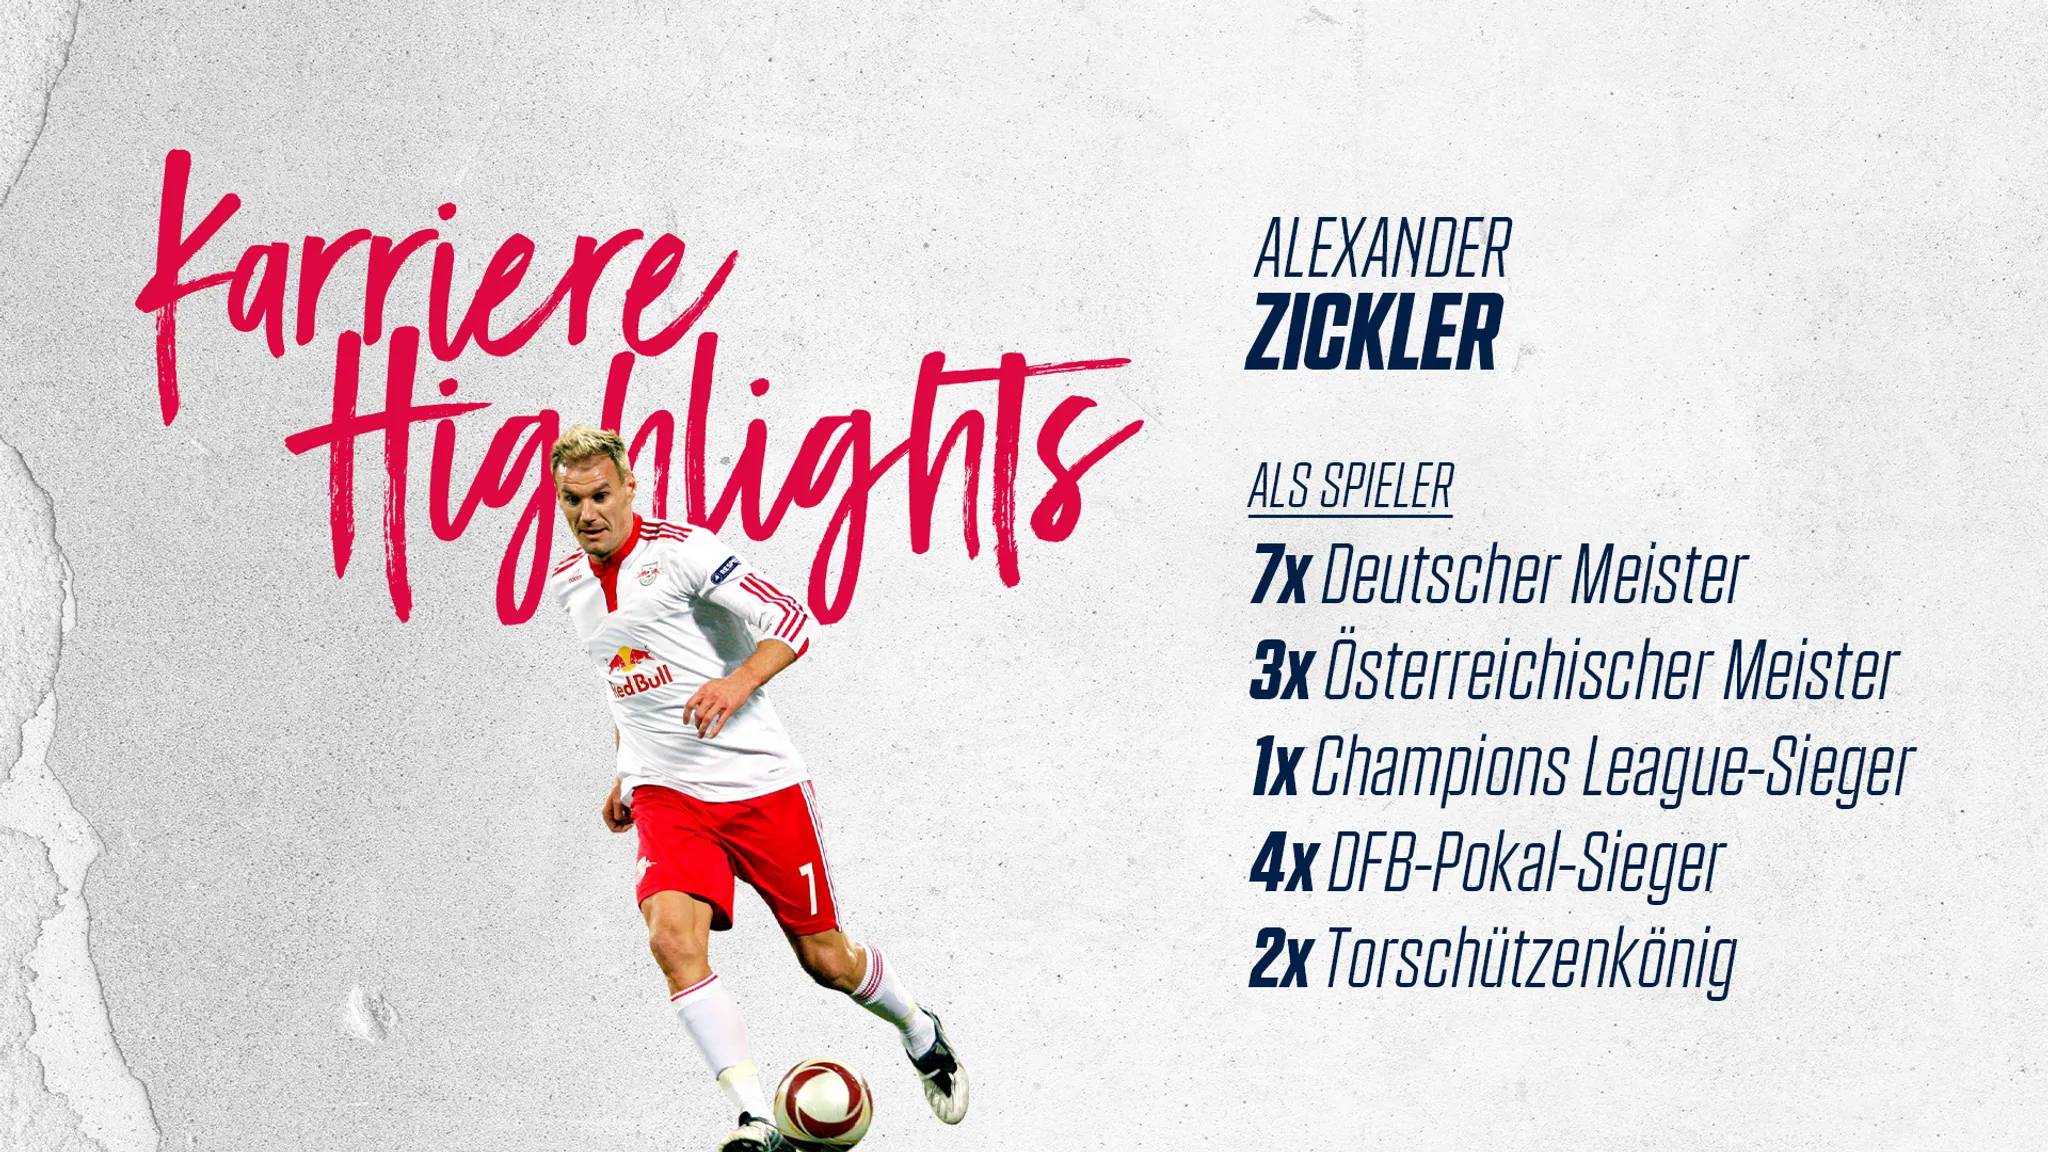 Alexander Zicklers Highlights als Spieler.